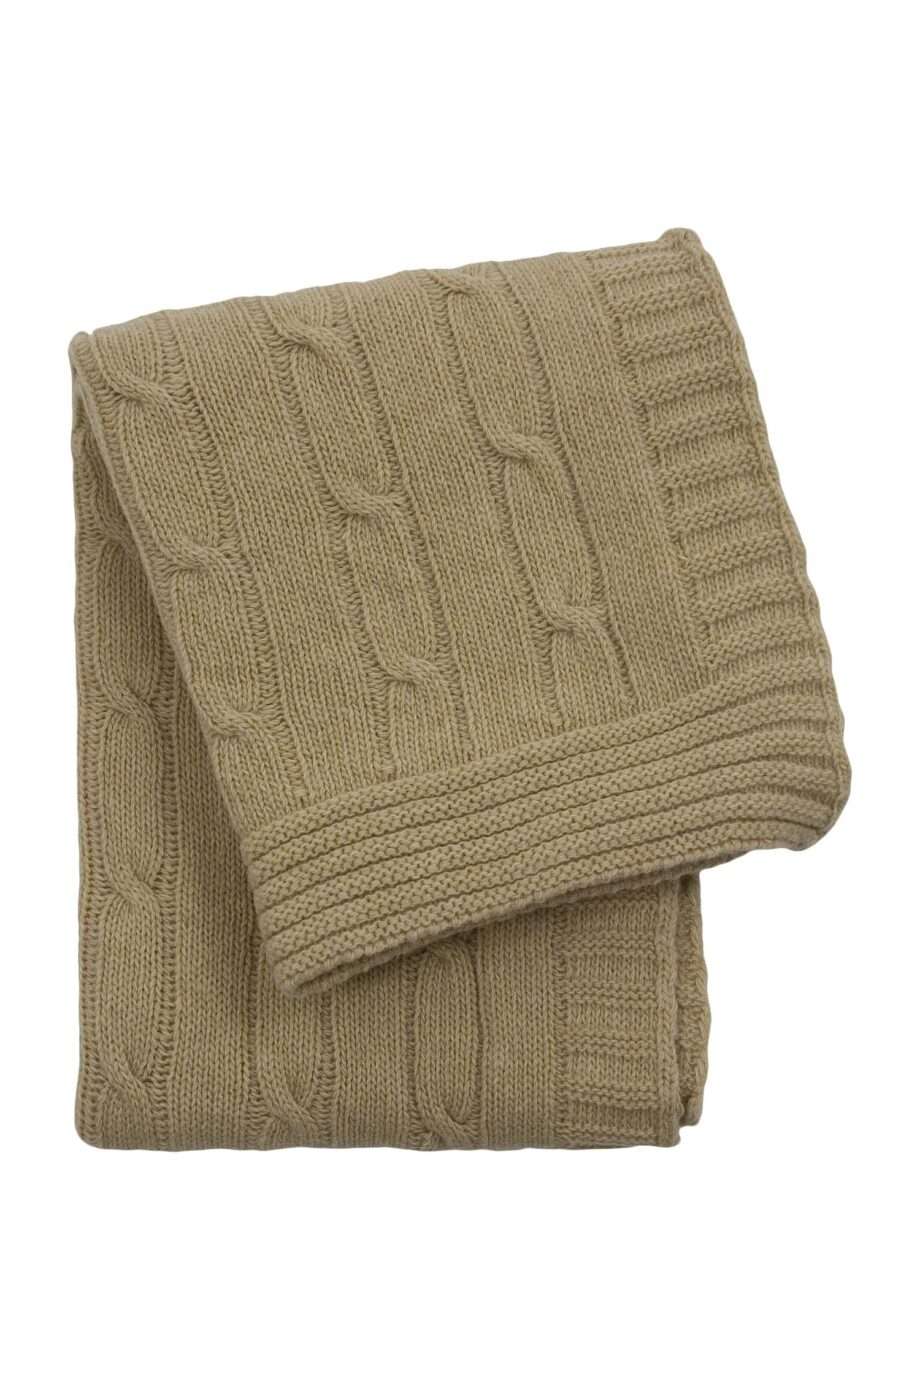 twist ochre knitted woolen little blanket medium